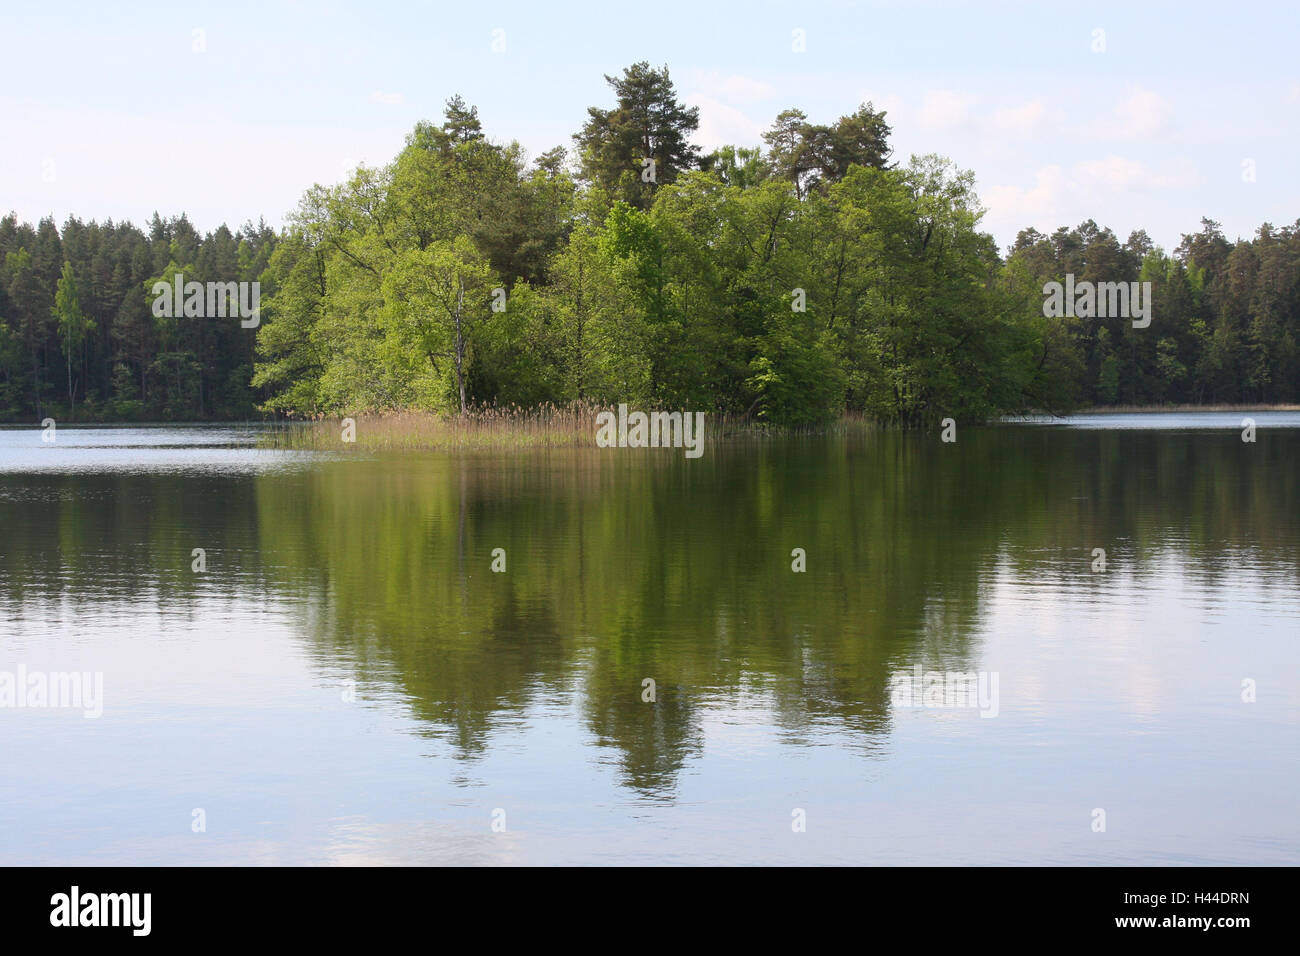 Poland, scenery, lake, island, destination, nature, vegetation, trees, water, mirroring, water surface, deserted, rest, silence, Idyll, Stock Photo